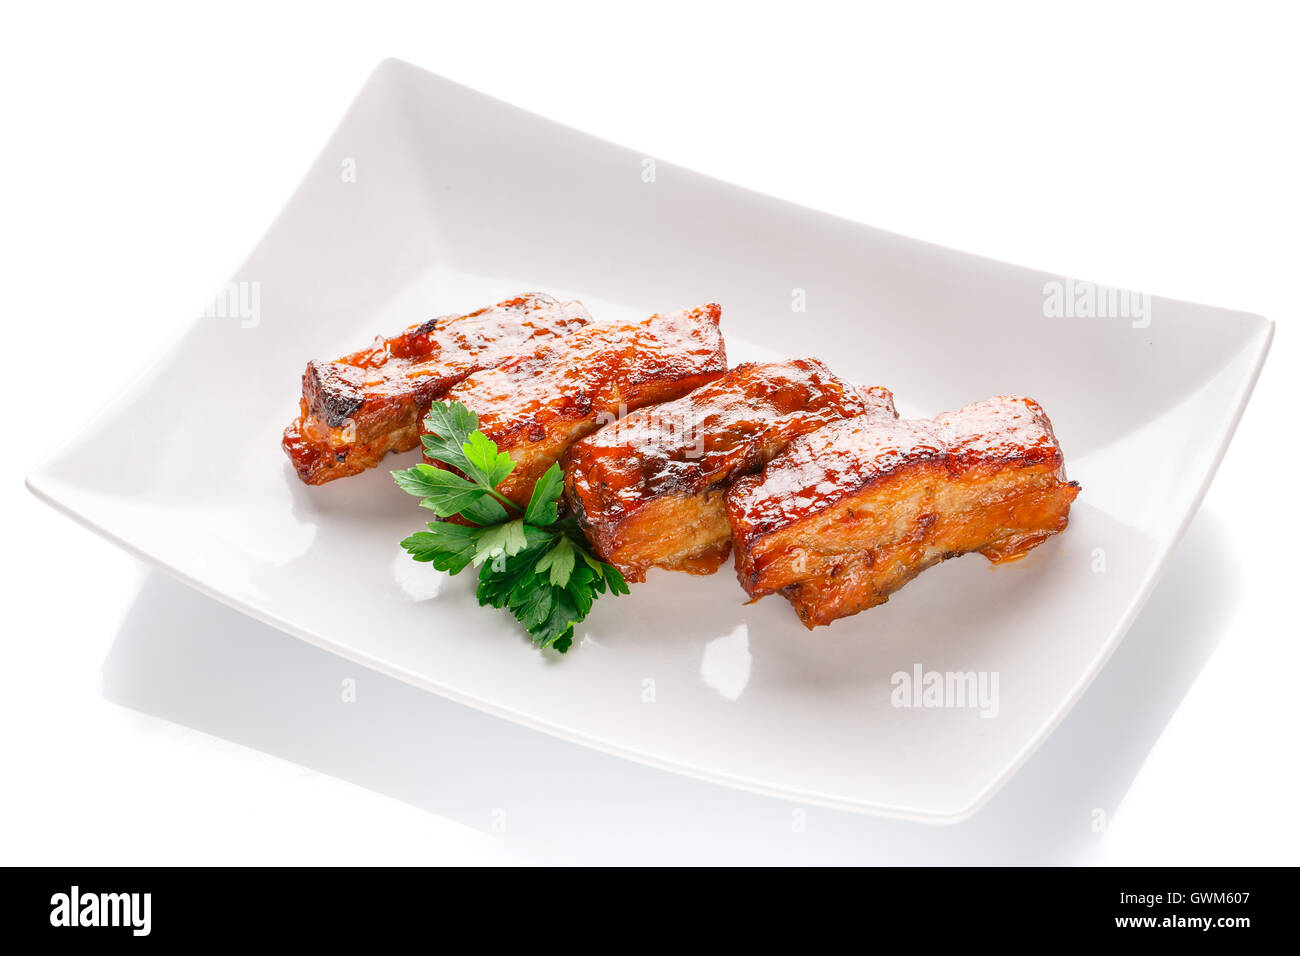 Restaurant food - grilled steak on white Stock Photo